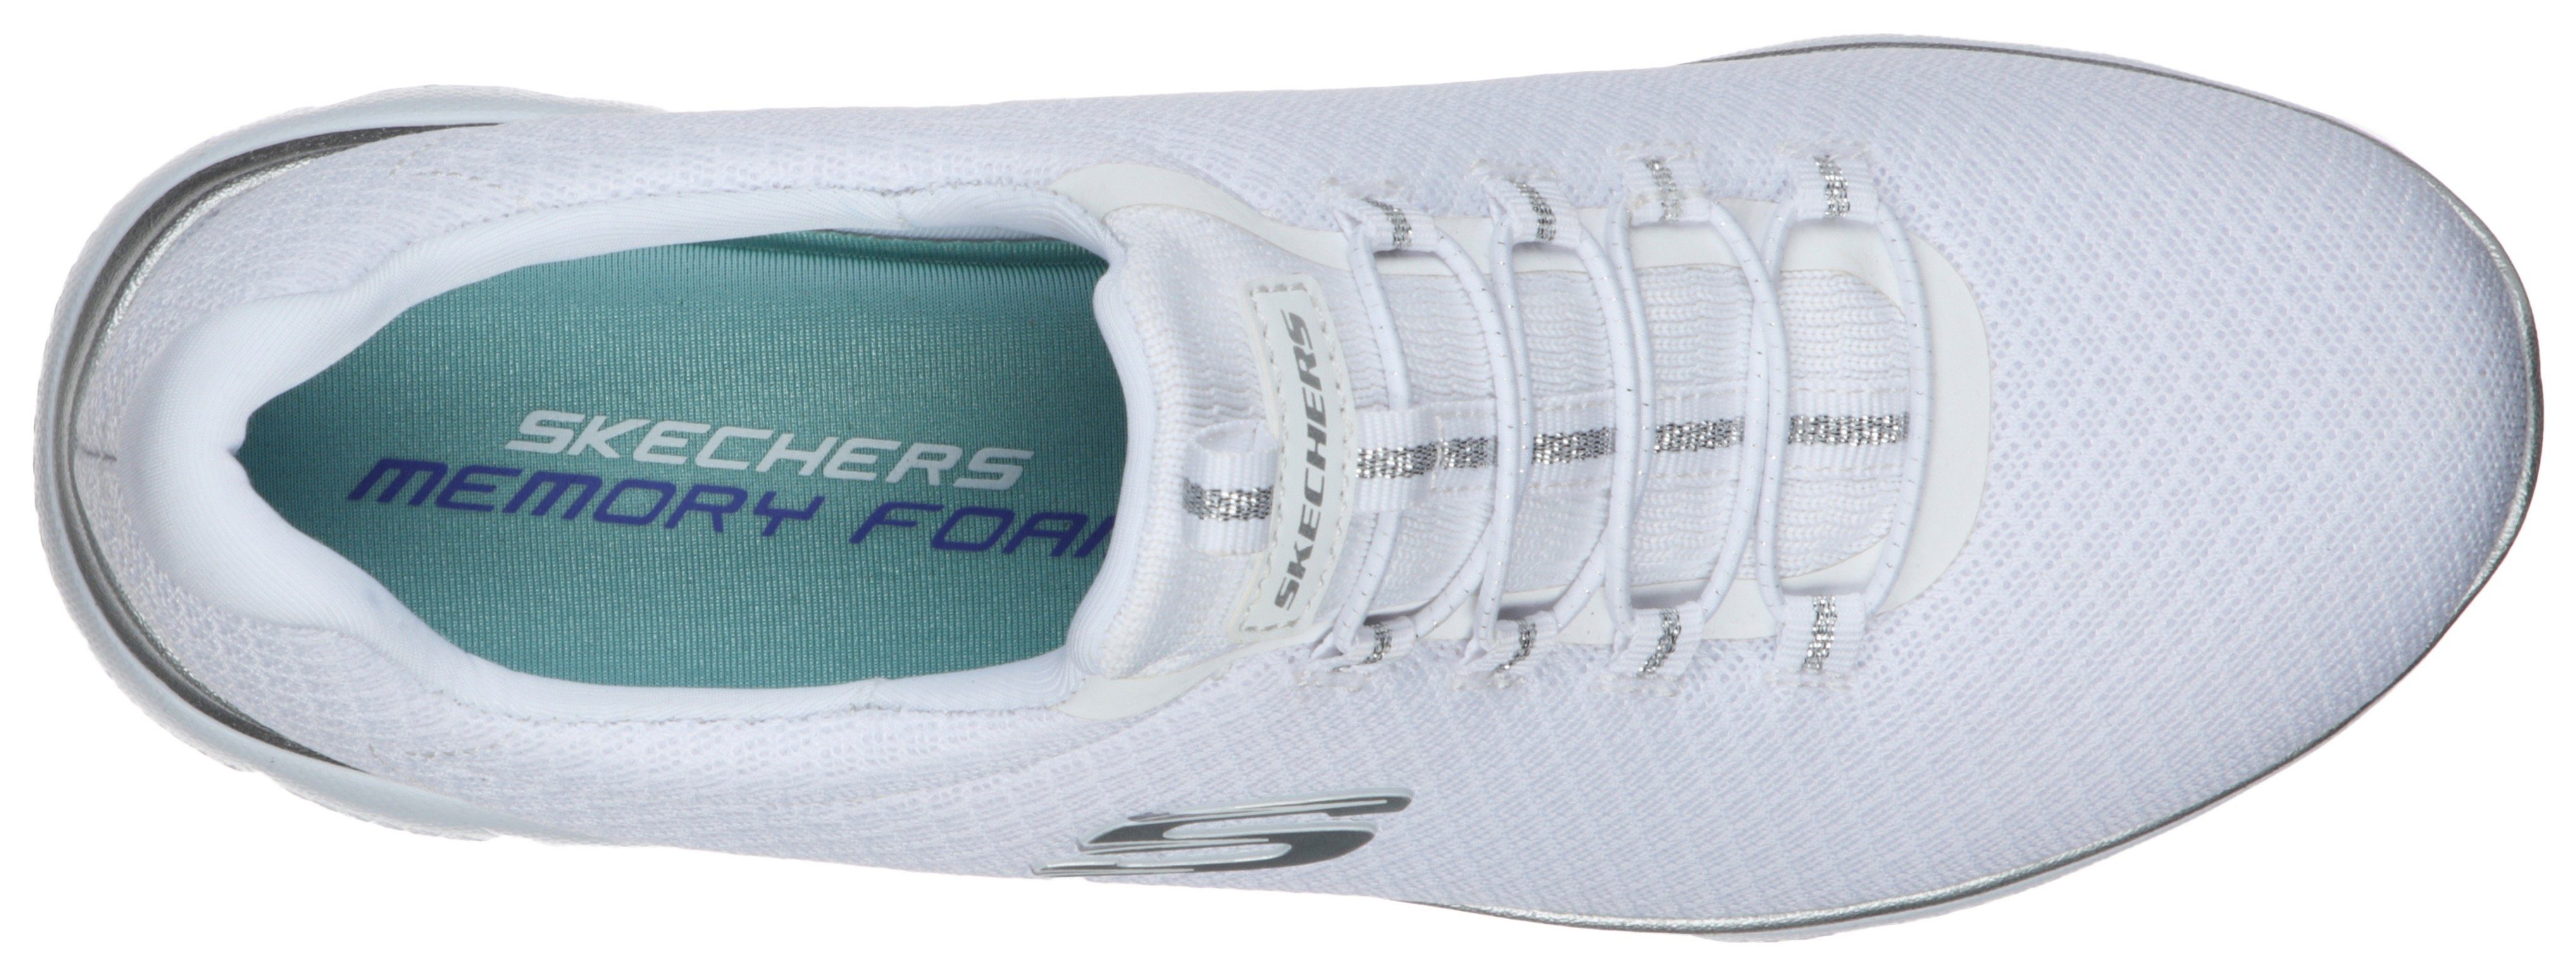 Slip-On Sneaker weiß-silberfarben Skechers SUMMITS dezenten Kontrast-Details mit